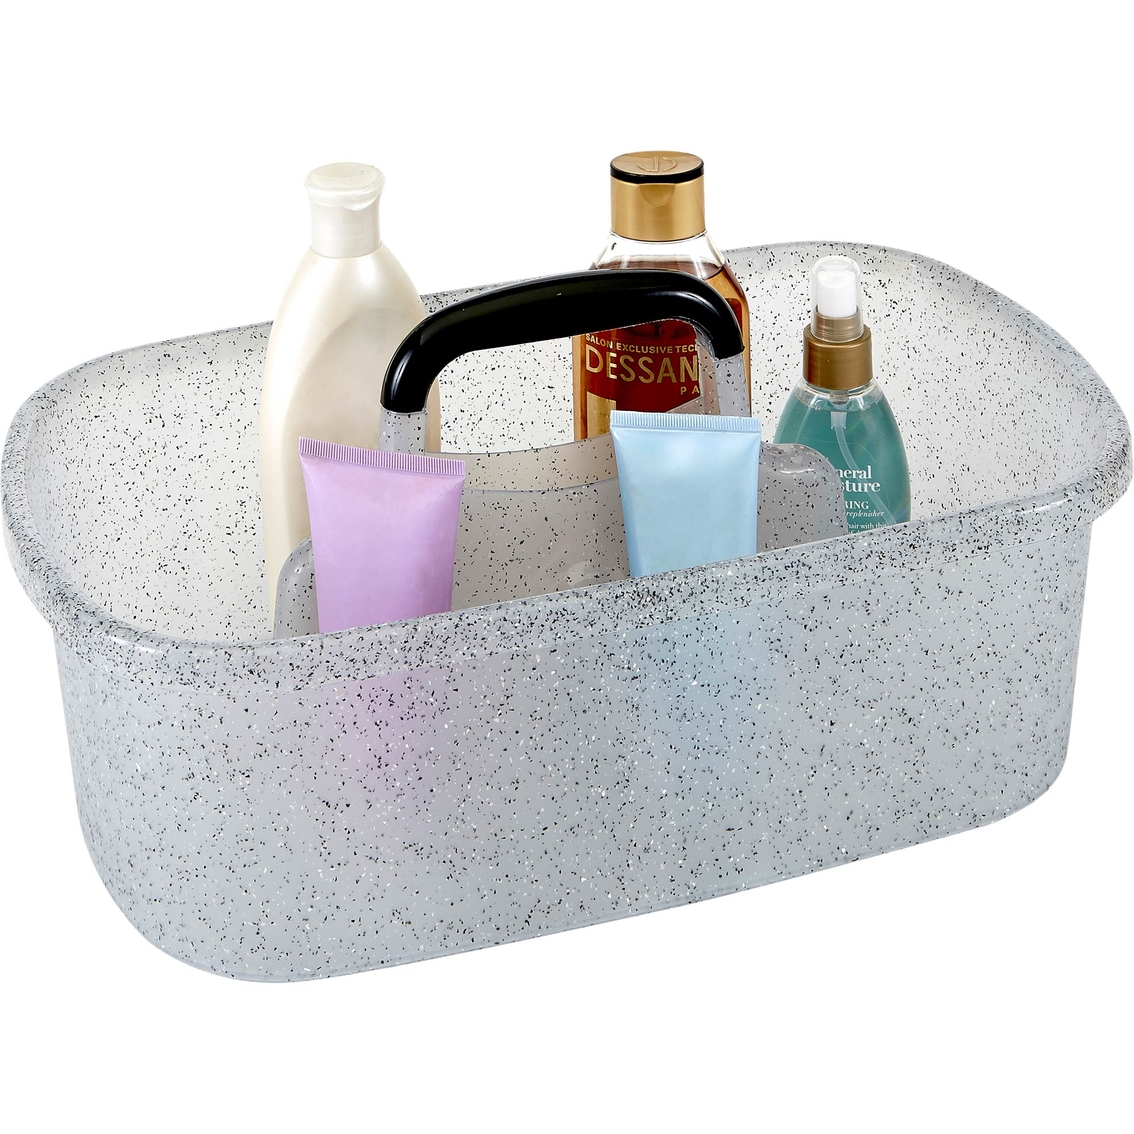 Bath Bliss Simplify Granite Look Shower Caddy - Image 2 of 3